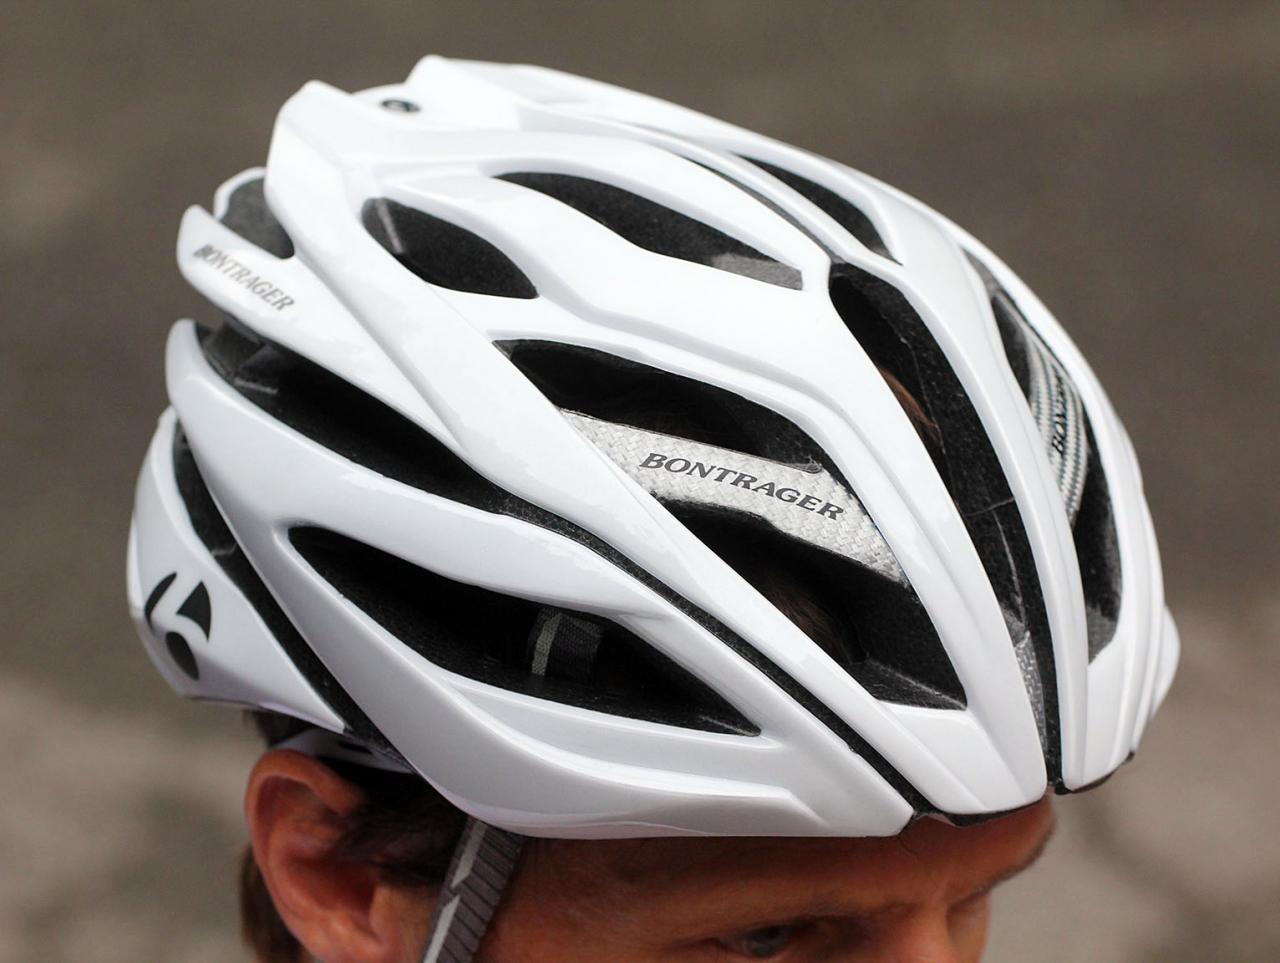 Details about   Bontrager Specter helmet size Small